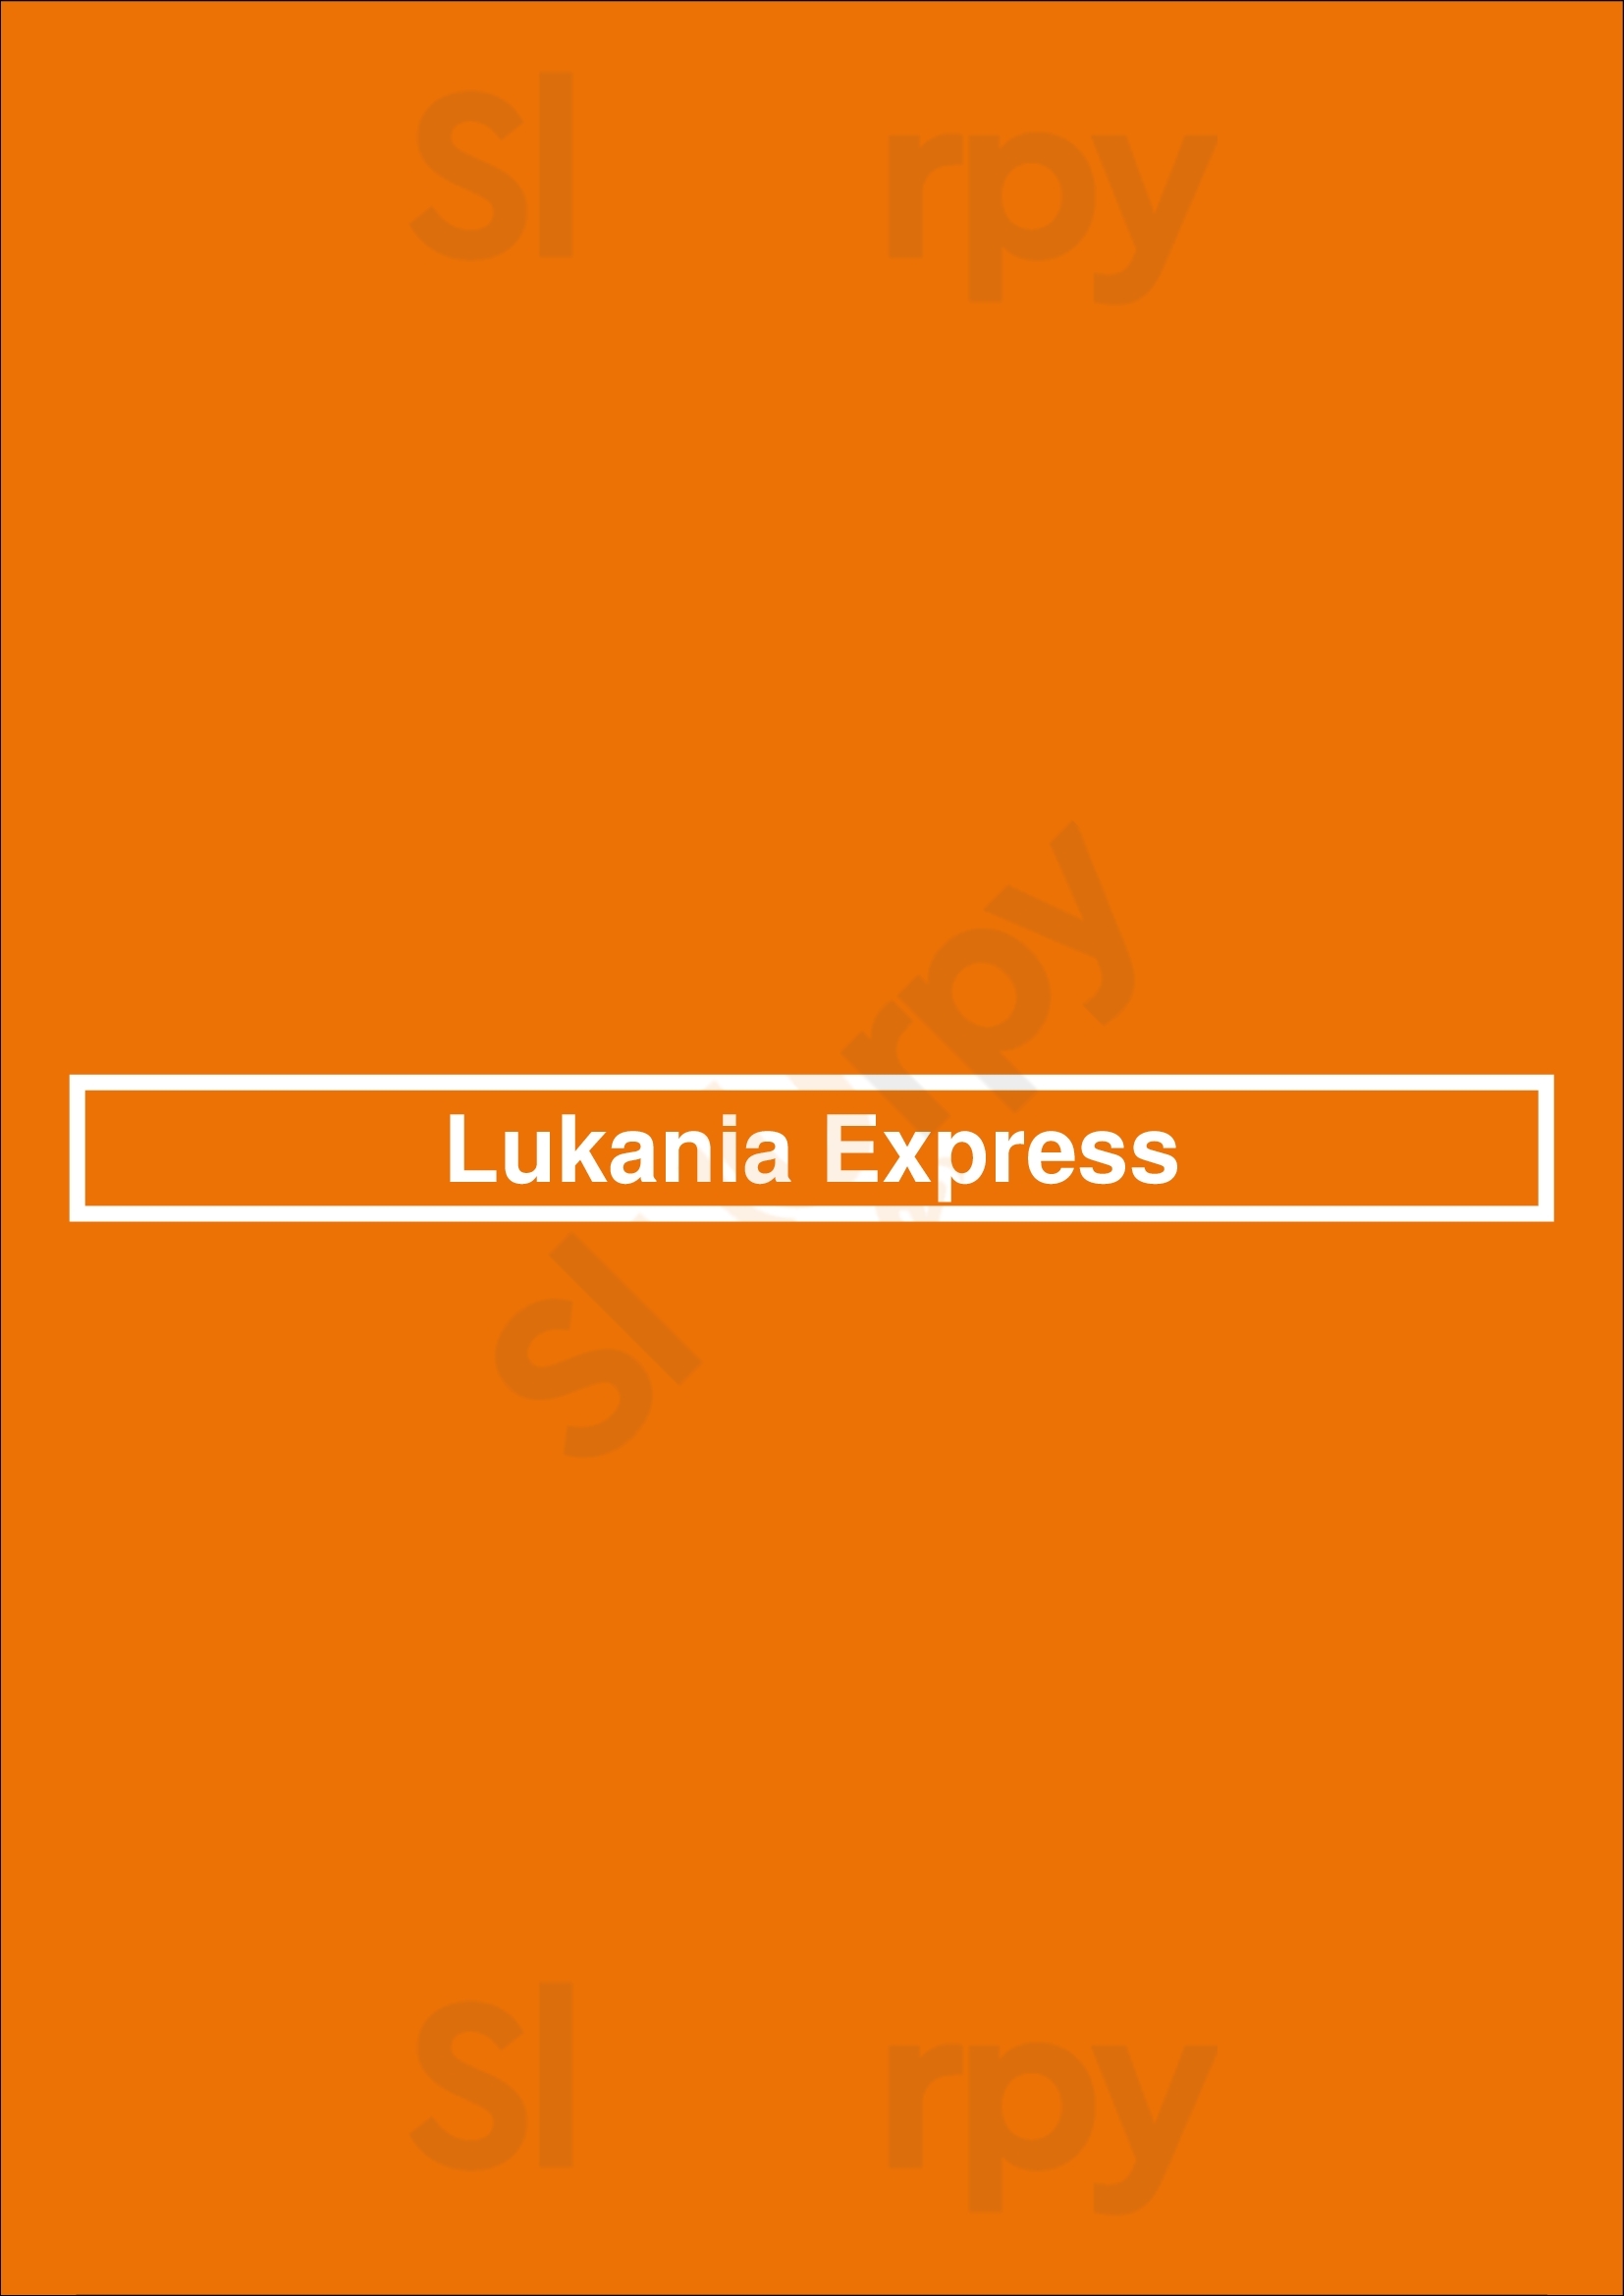 Lukania Express Korbeek-Lo Menu - 1